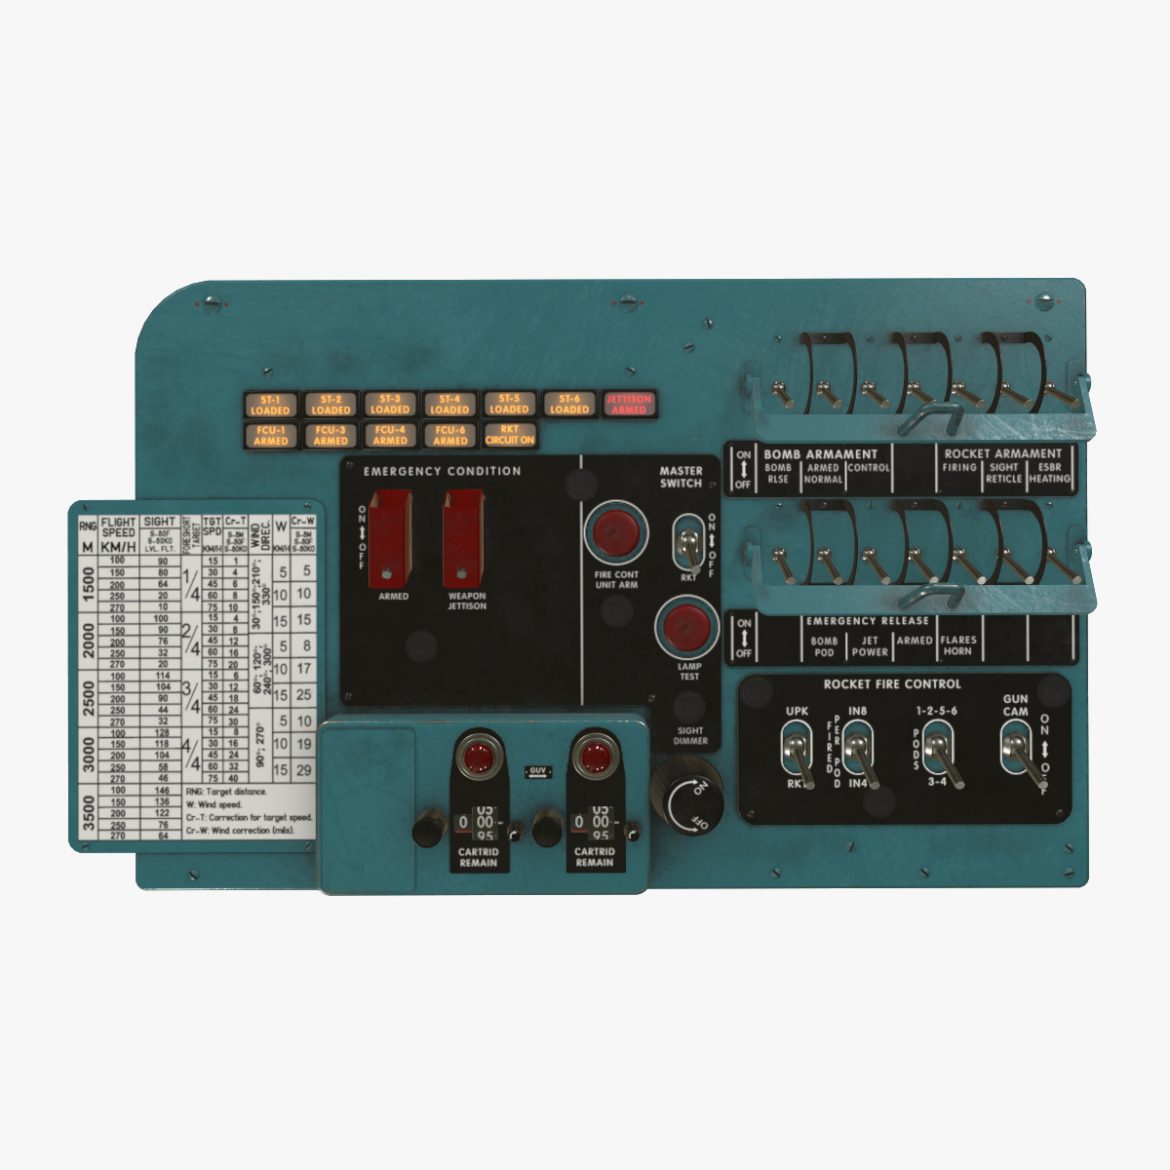 mi-8mt mi-17mt left circuit console english 3d model 3ds max fbx obj 301670